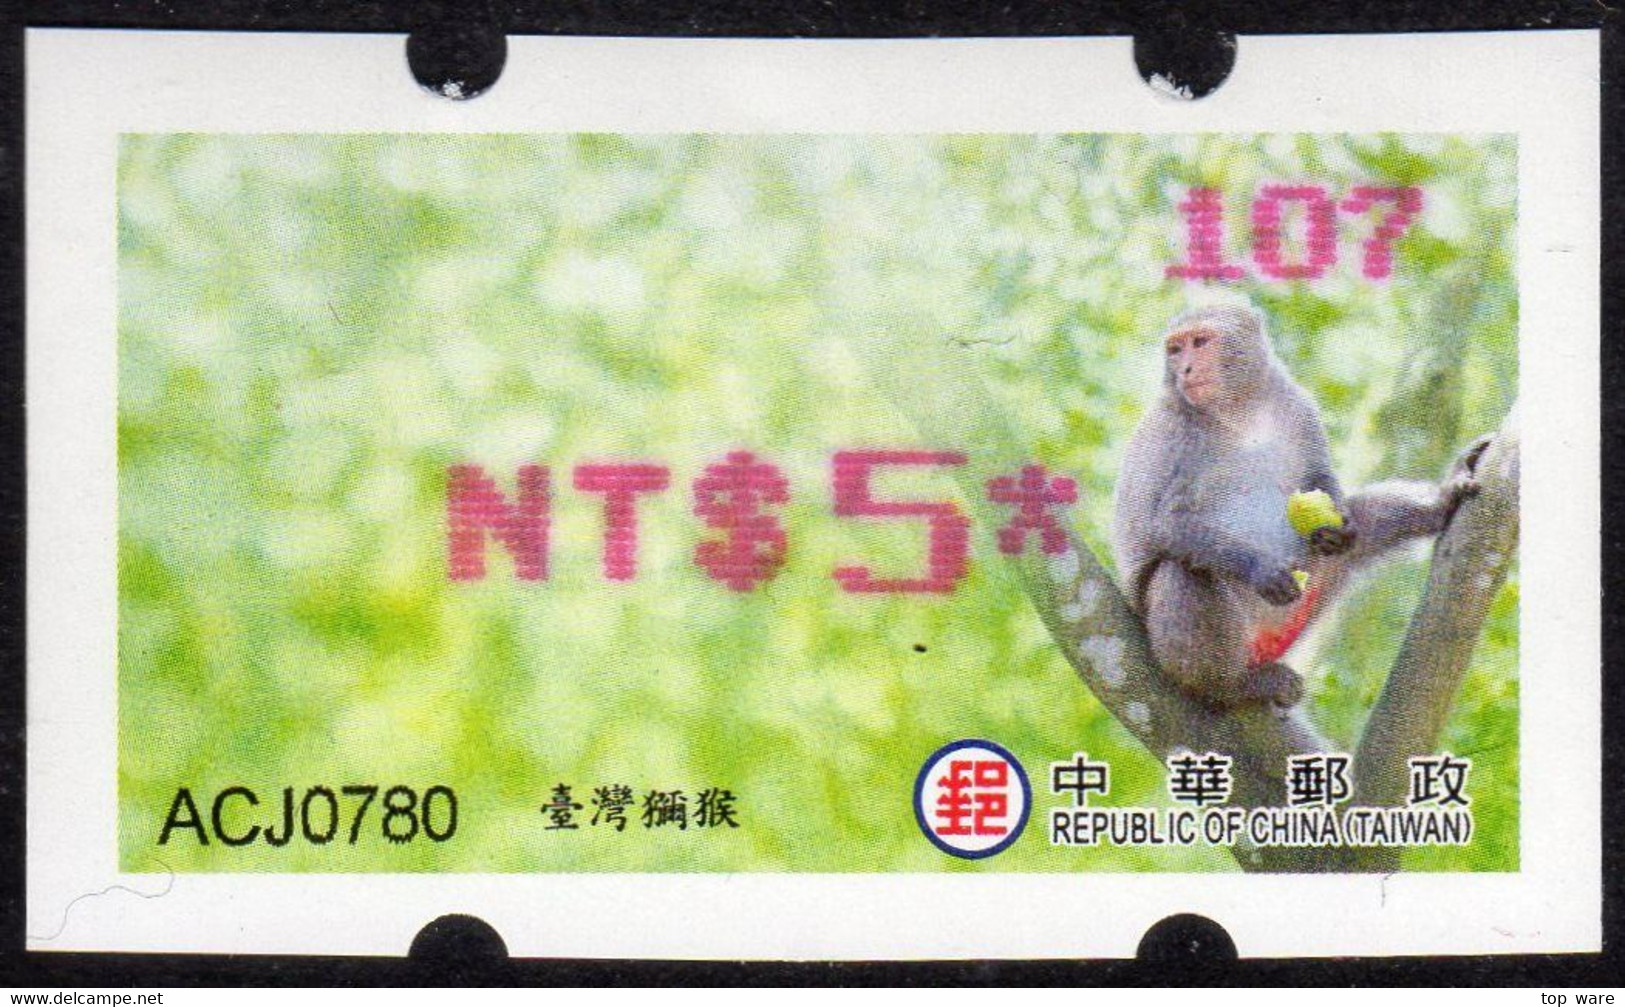 2018 Automatenmarken China Taiwan ROCUPEX Macaque Monkey MiNr.40 Pink Nr.107 ATM NT$5 Xx Innovision Kiosk Etiquetas - Distributors